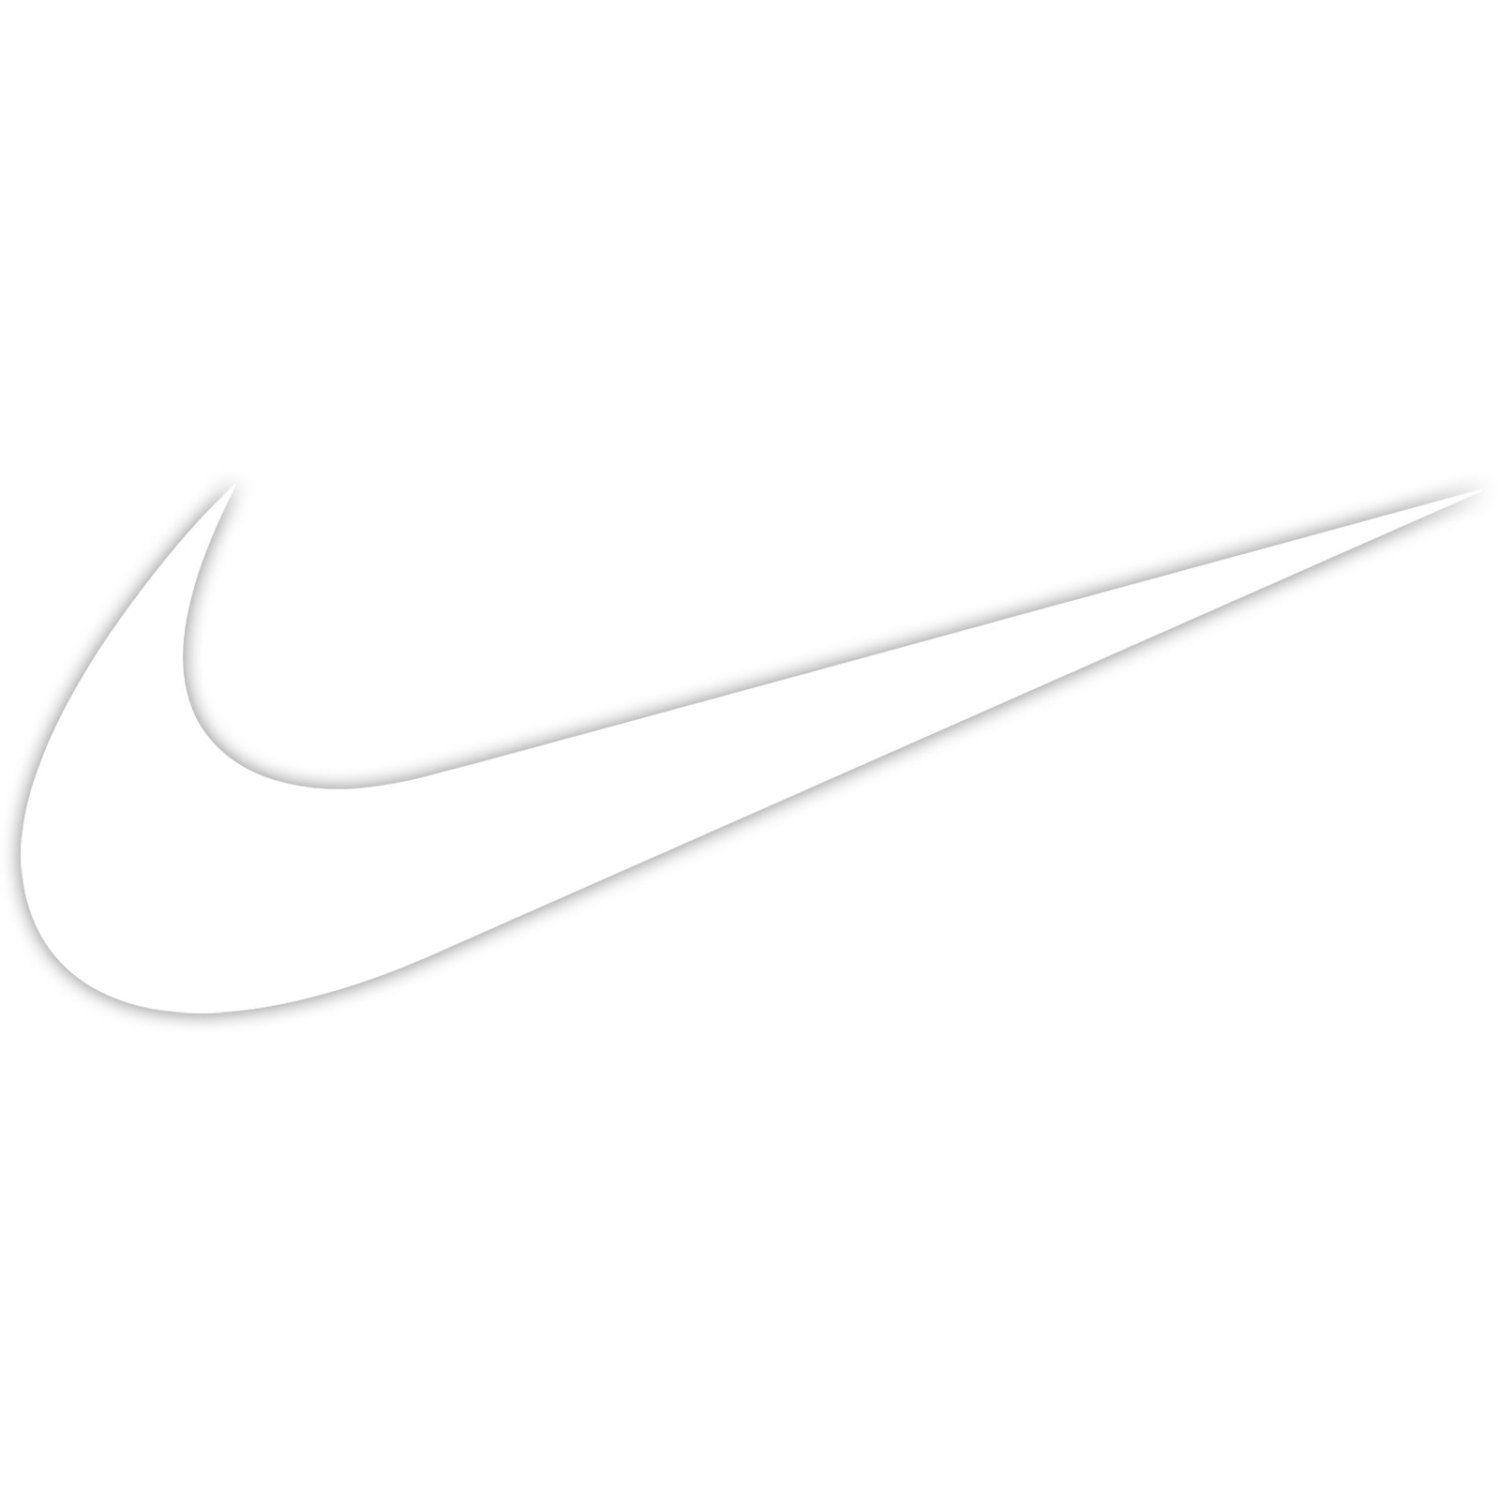 Nike White Logo - Free Nike Check Cliparts, Download Free Clip Art, Free Clip Art on ...